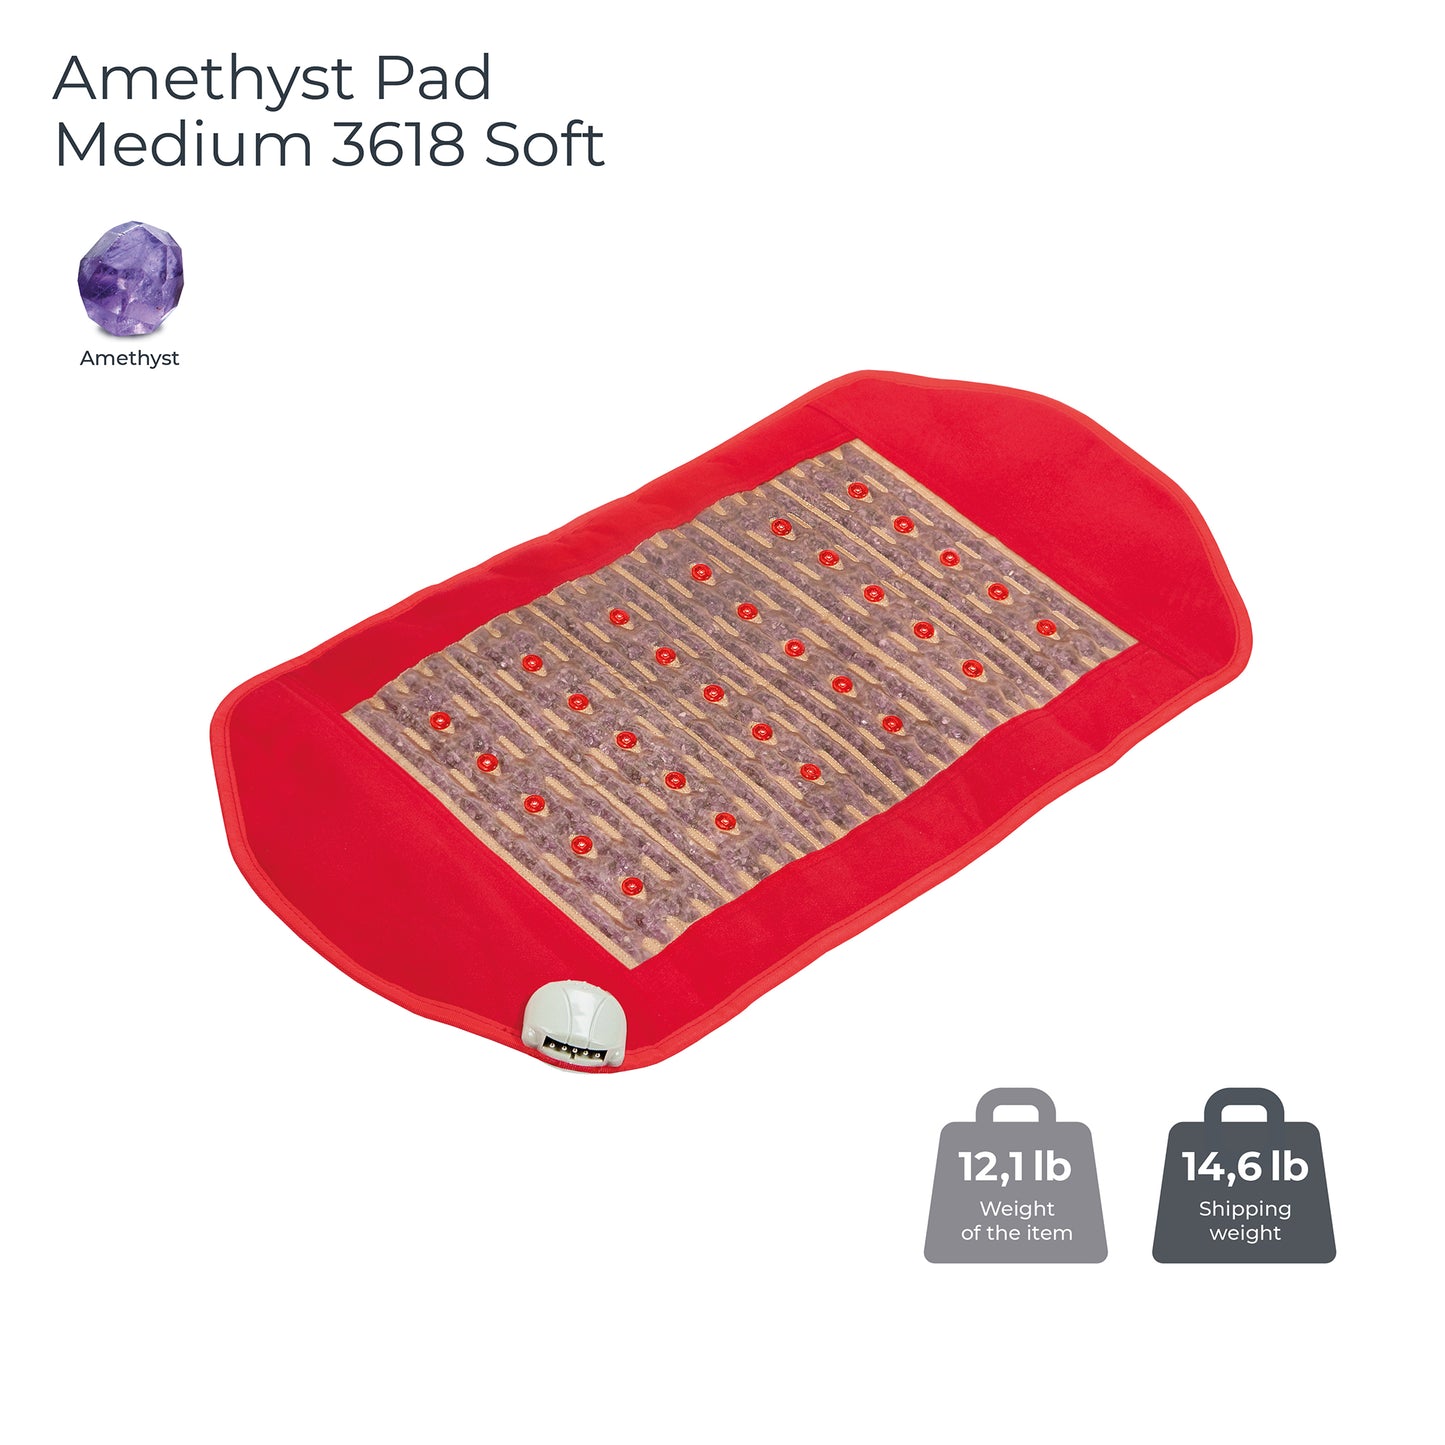 Photon PEMF InfraMat Pro® Amethyst Pad Medium 3618 Soft